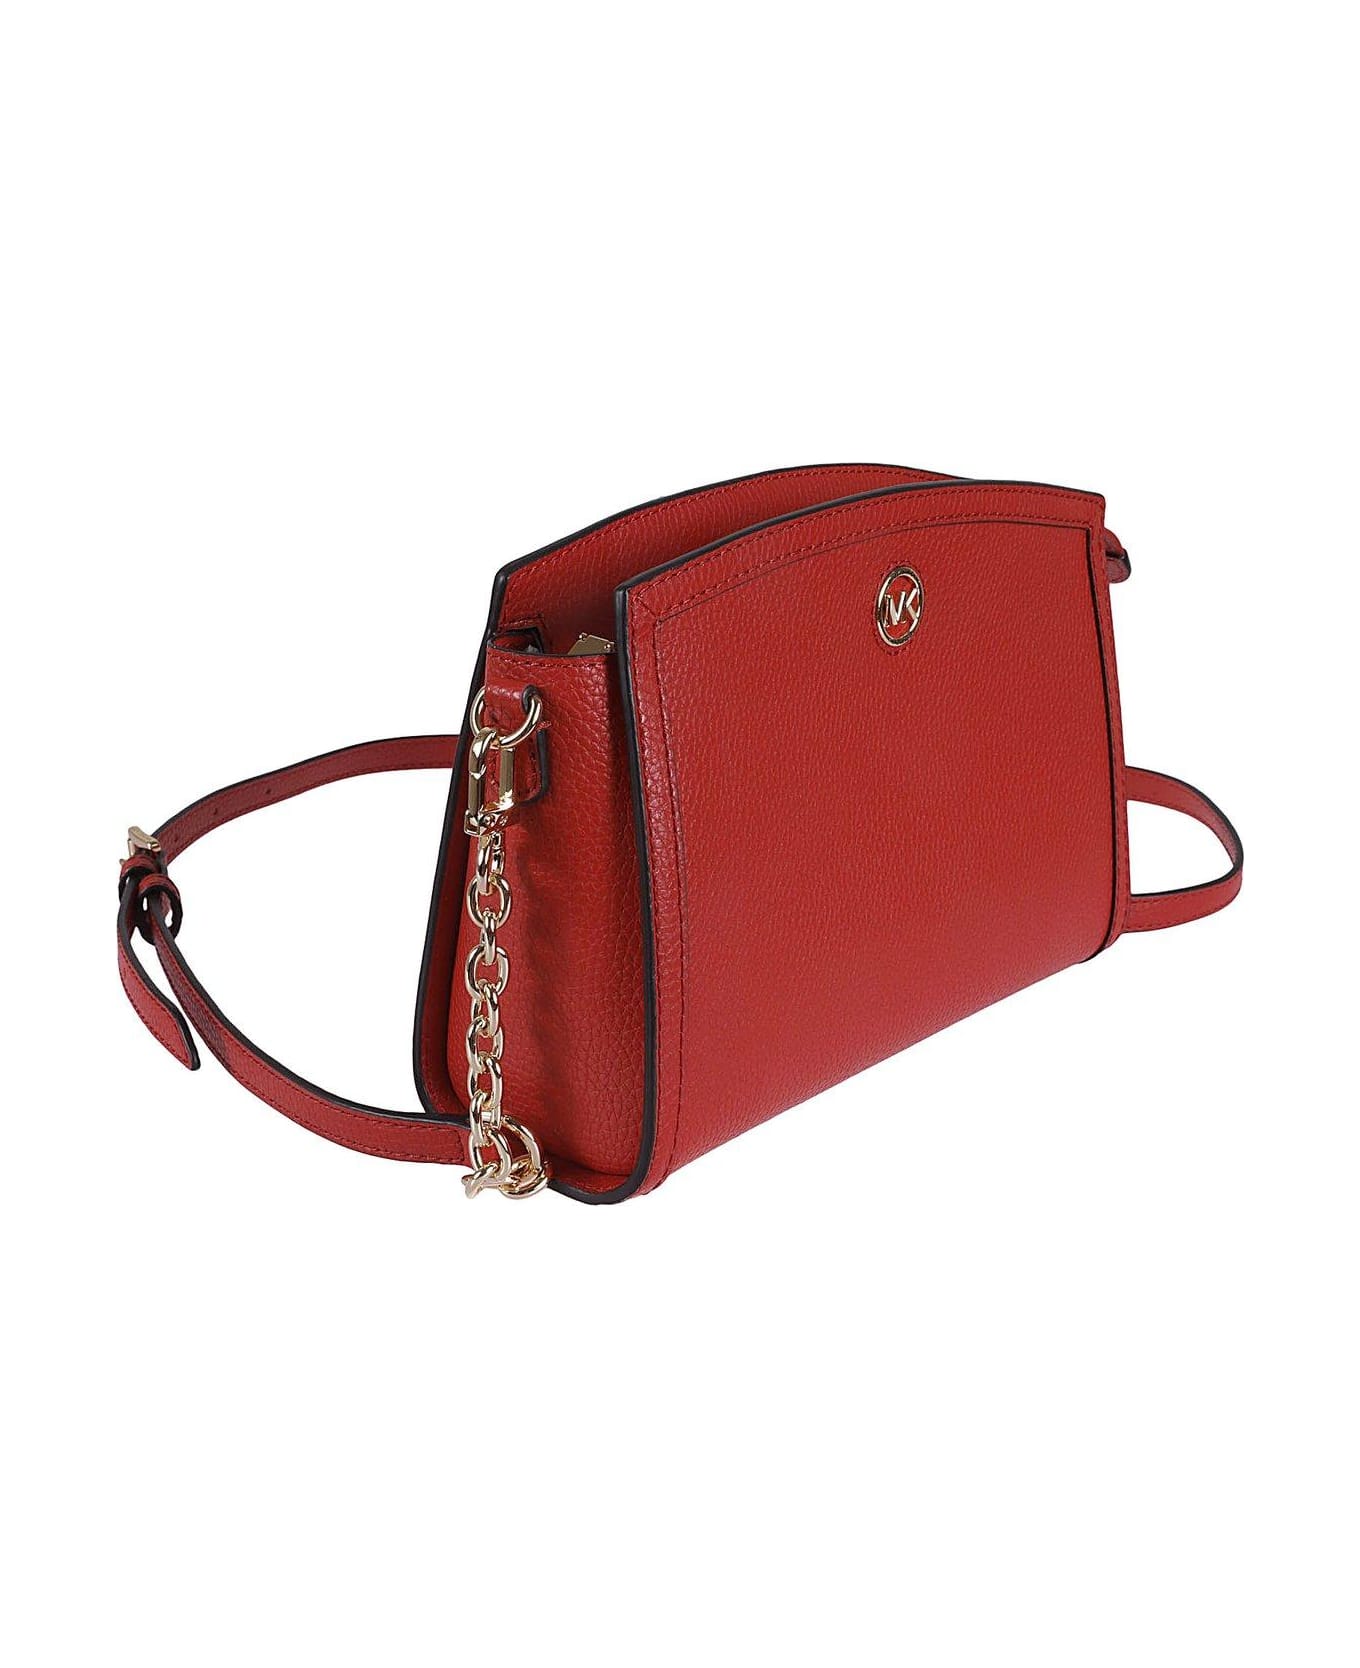 Michael Kors Chantal Shoulder Bag - red